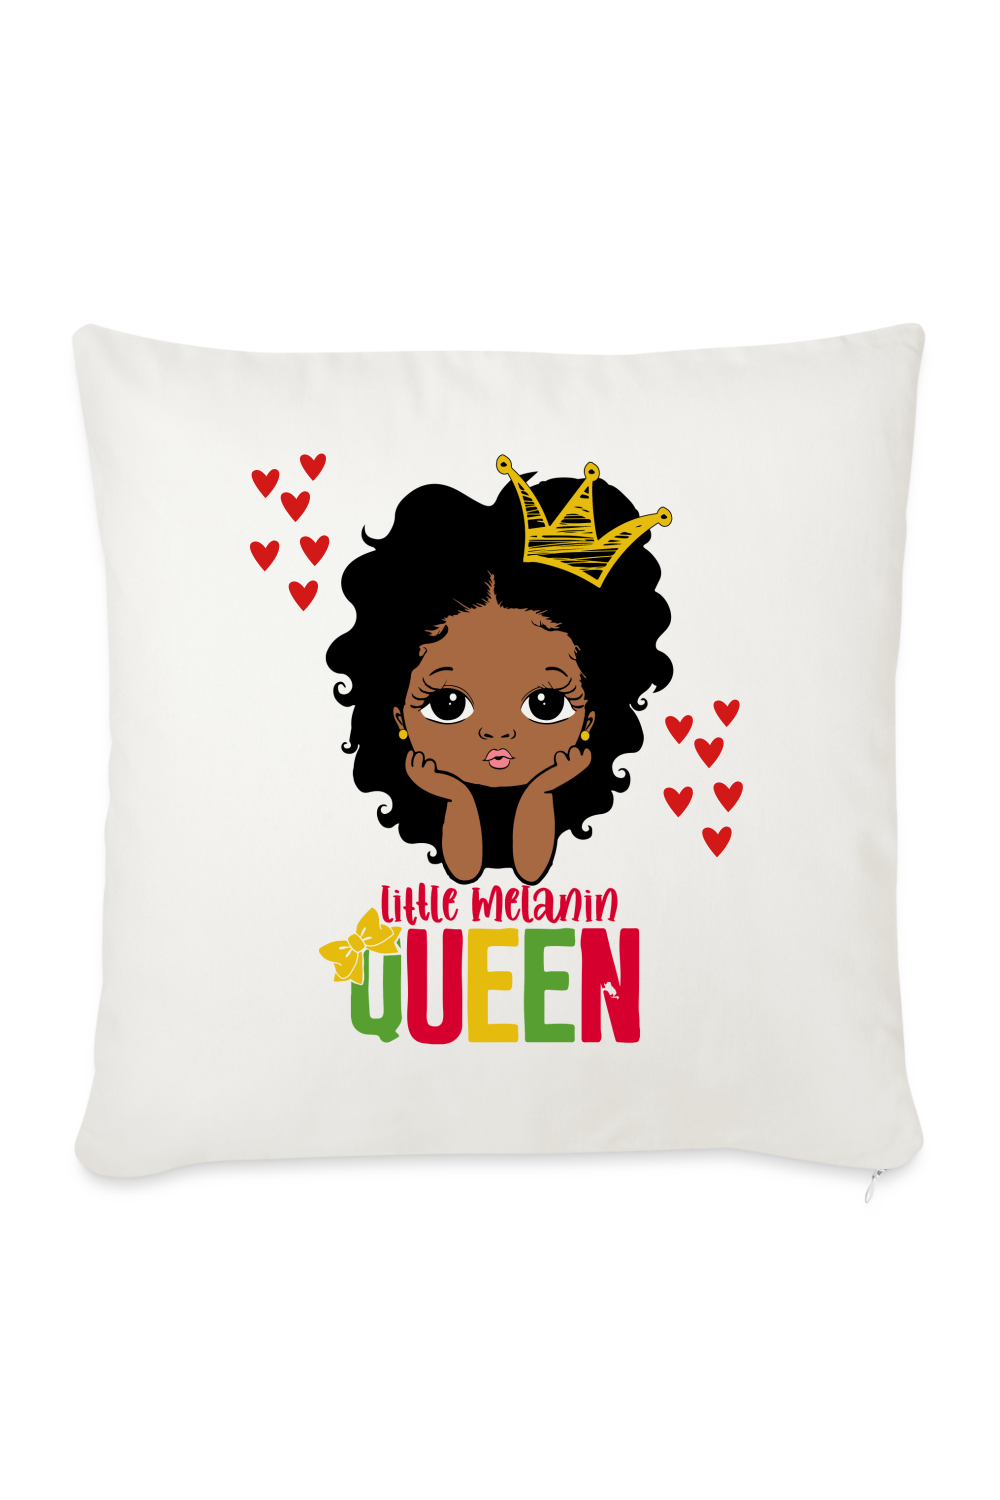 Little Melanin Queen Throw Pillow Cover 18” x 18” - natural white